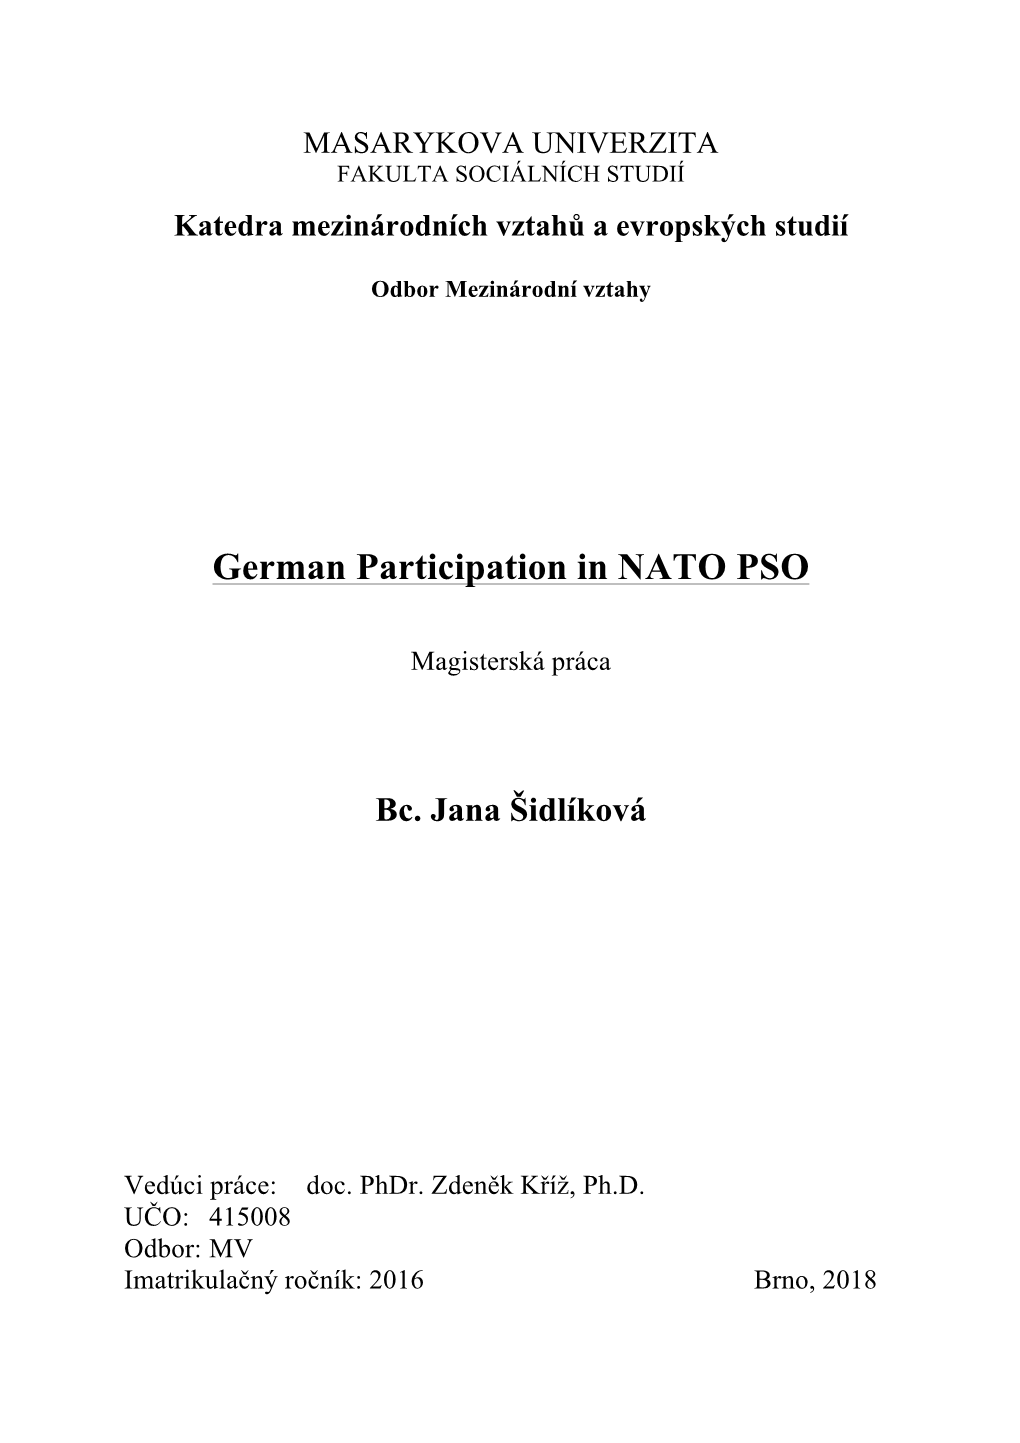 German Participation in NATO PSO